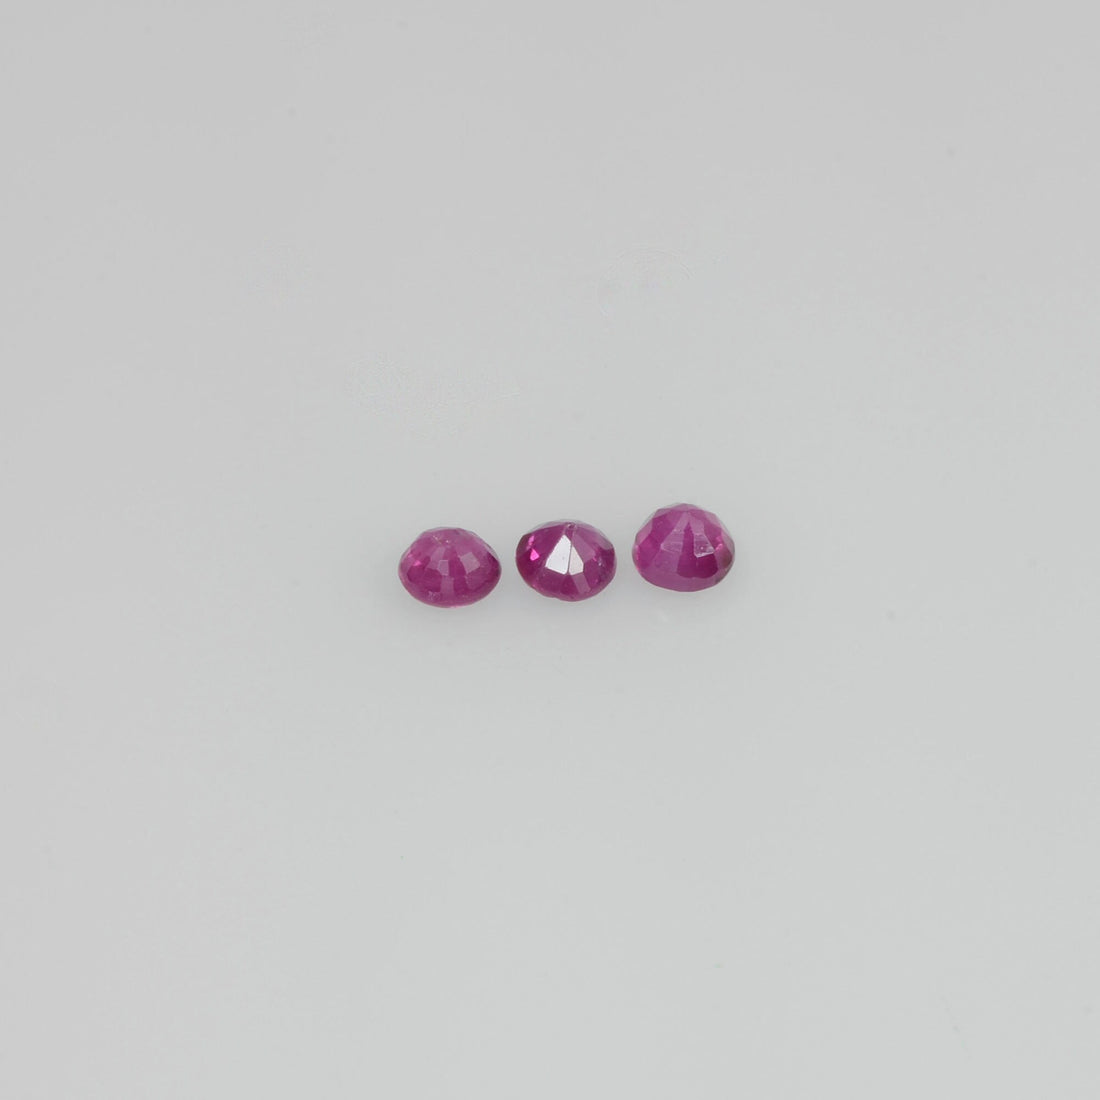 1.6-4.2 mm Natural Ruby Loose Gemstone Round Cut